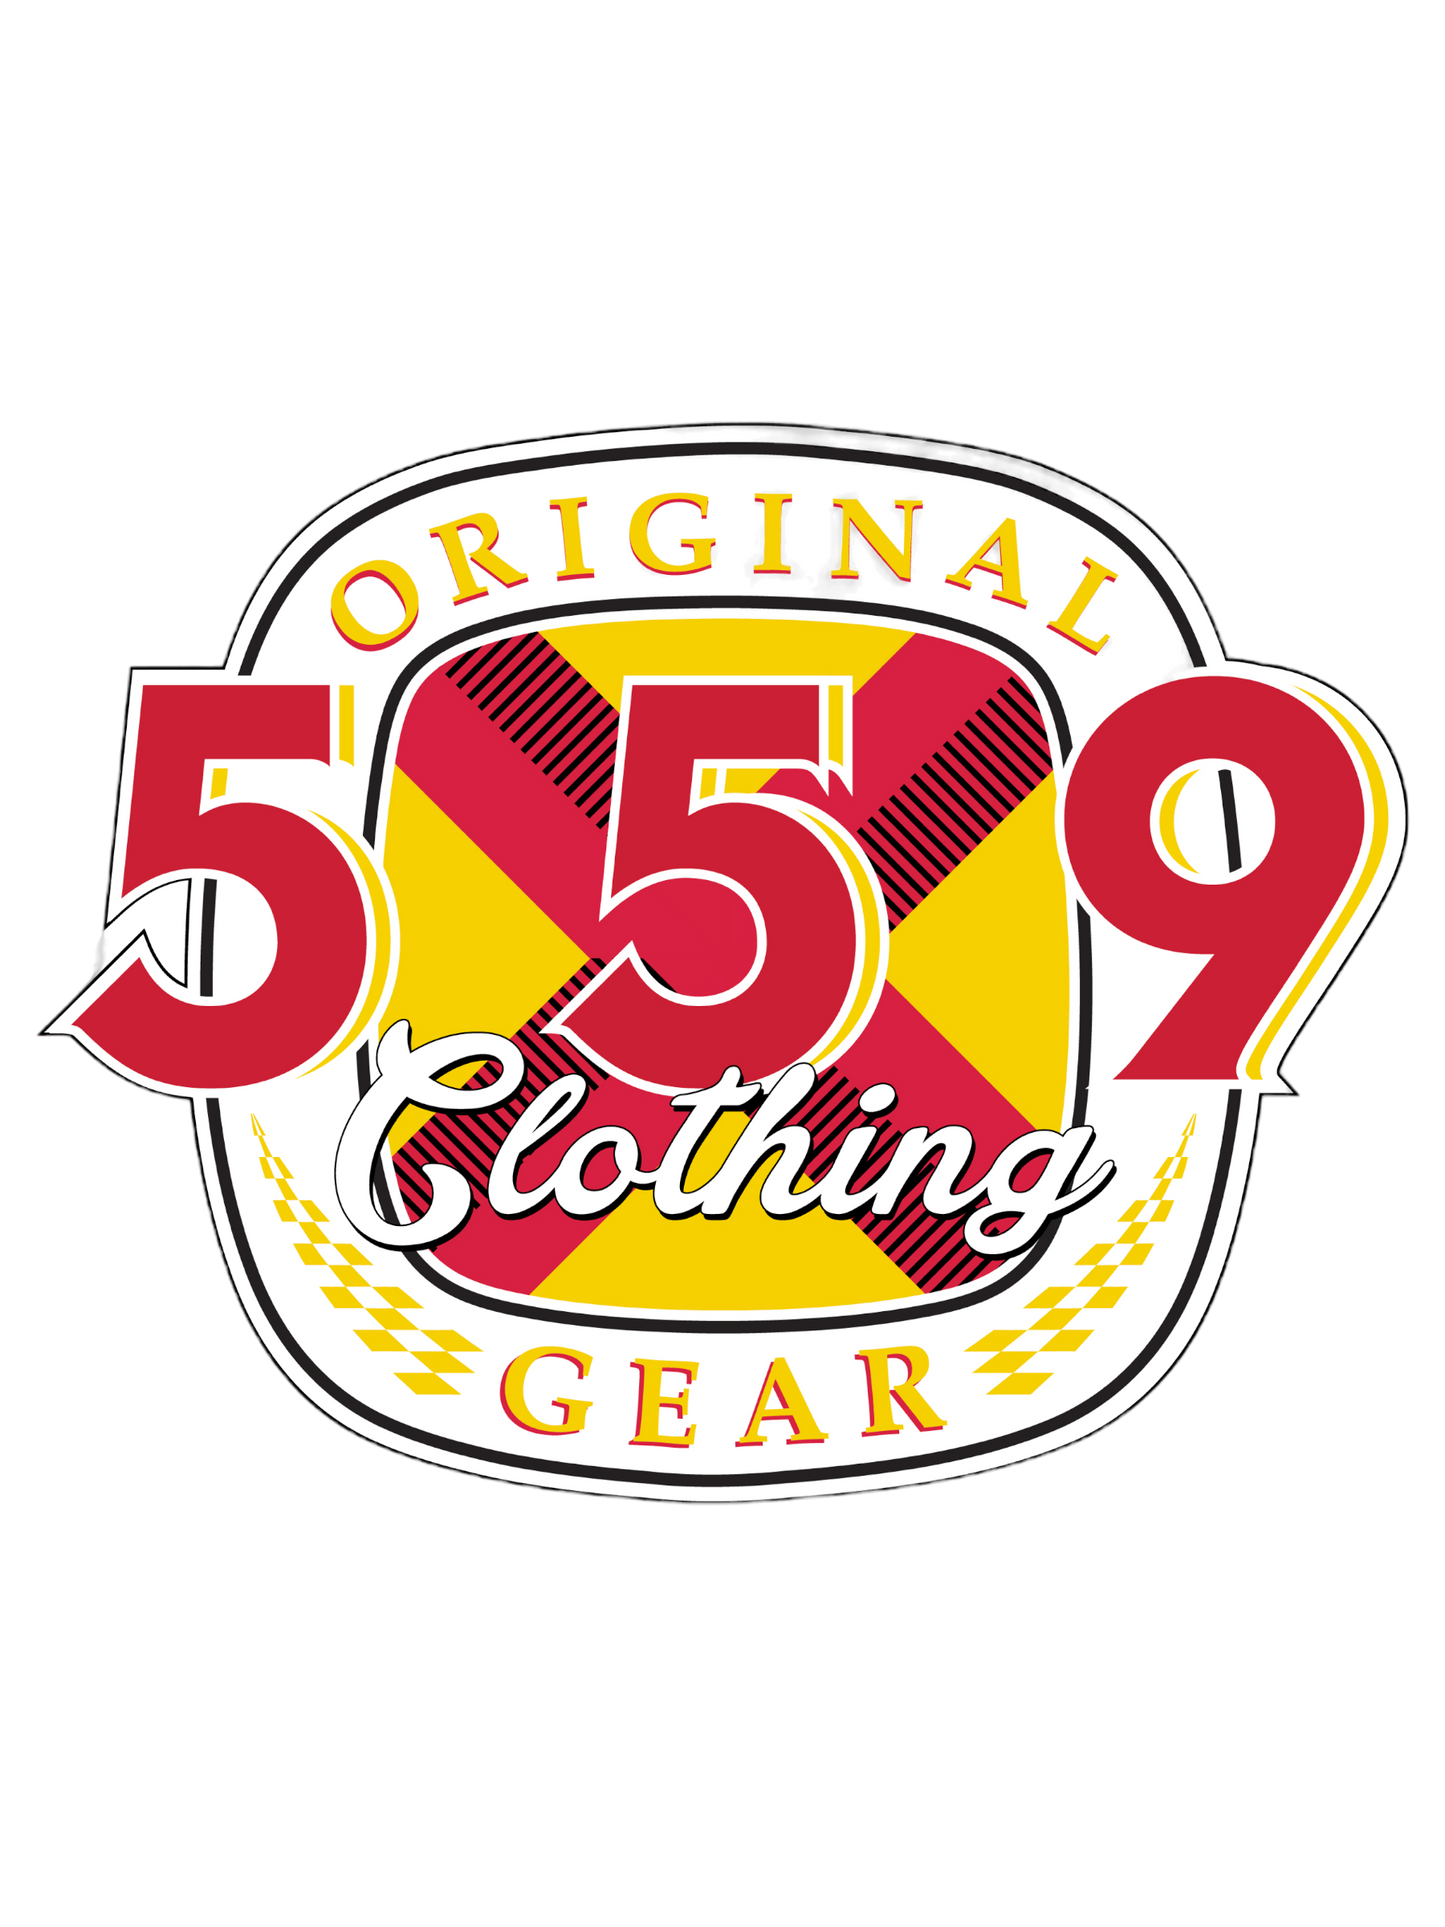 The original 559 clothing gear sticker.